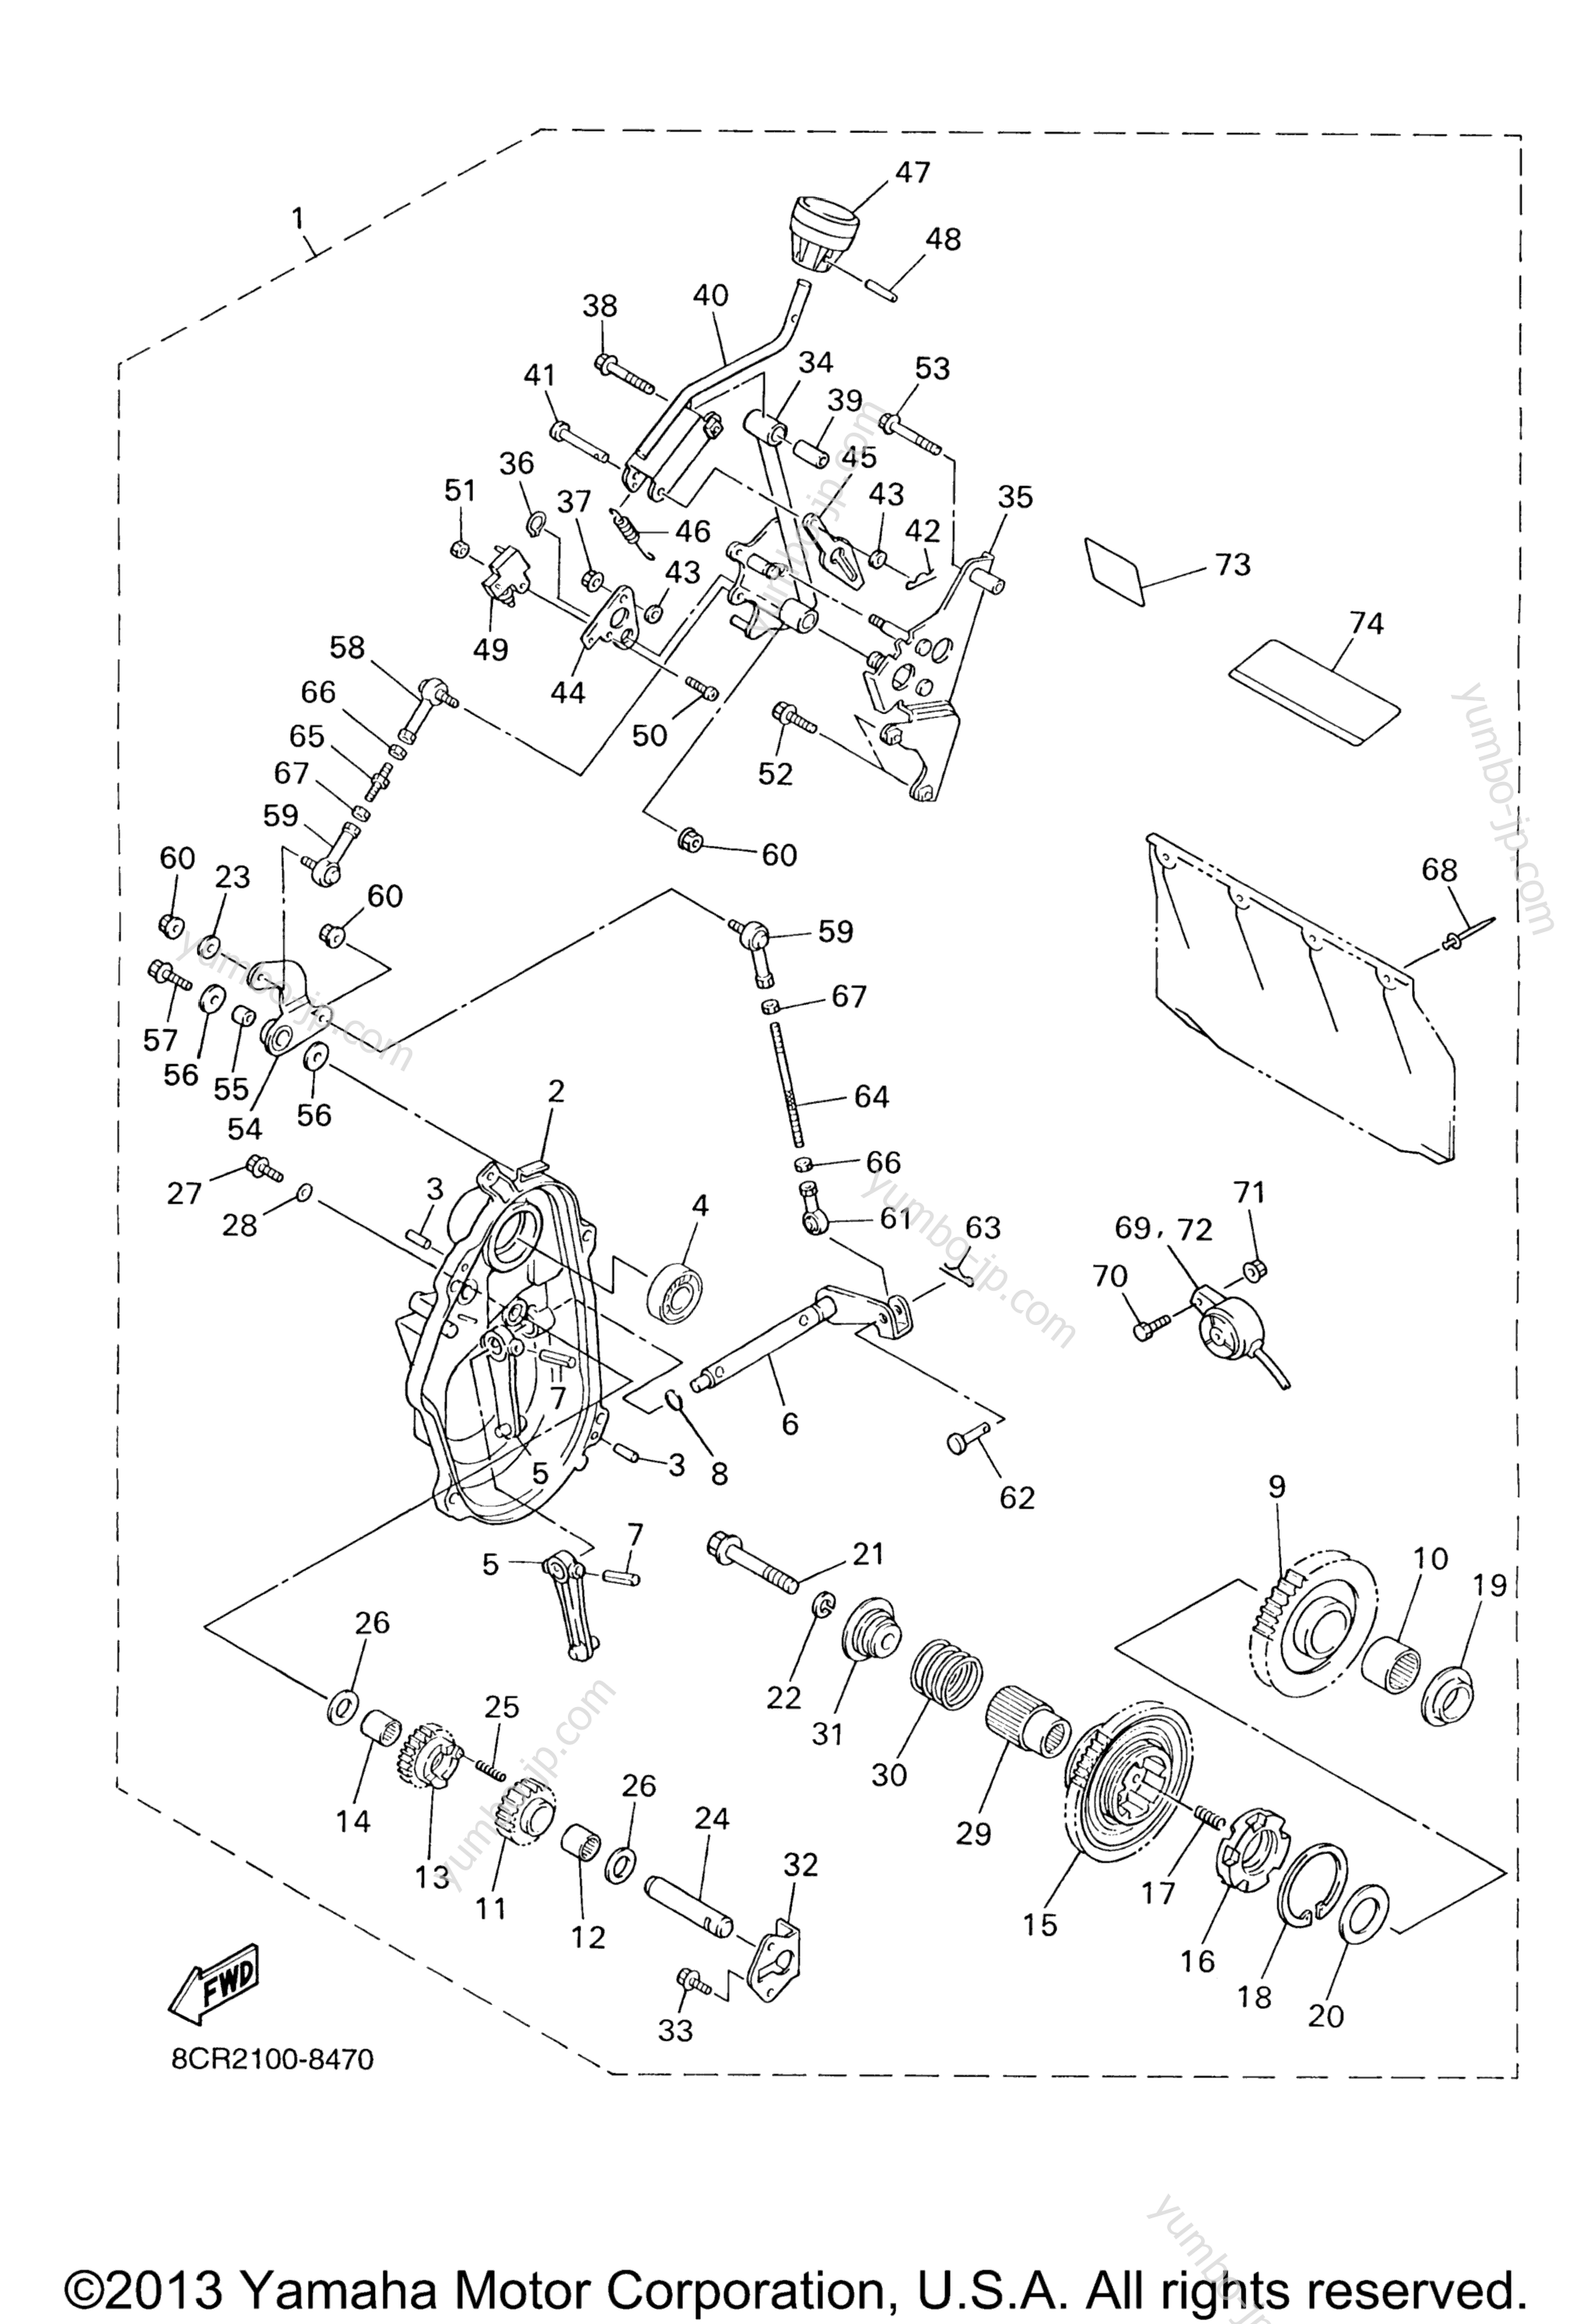 Alternate Reverse Gear Kit for snowmobiles YAMAHA VX700F 2001 year